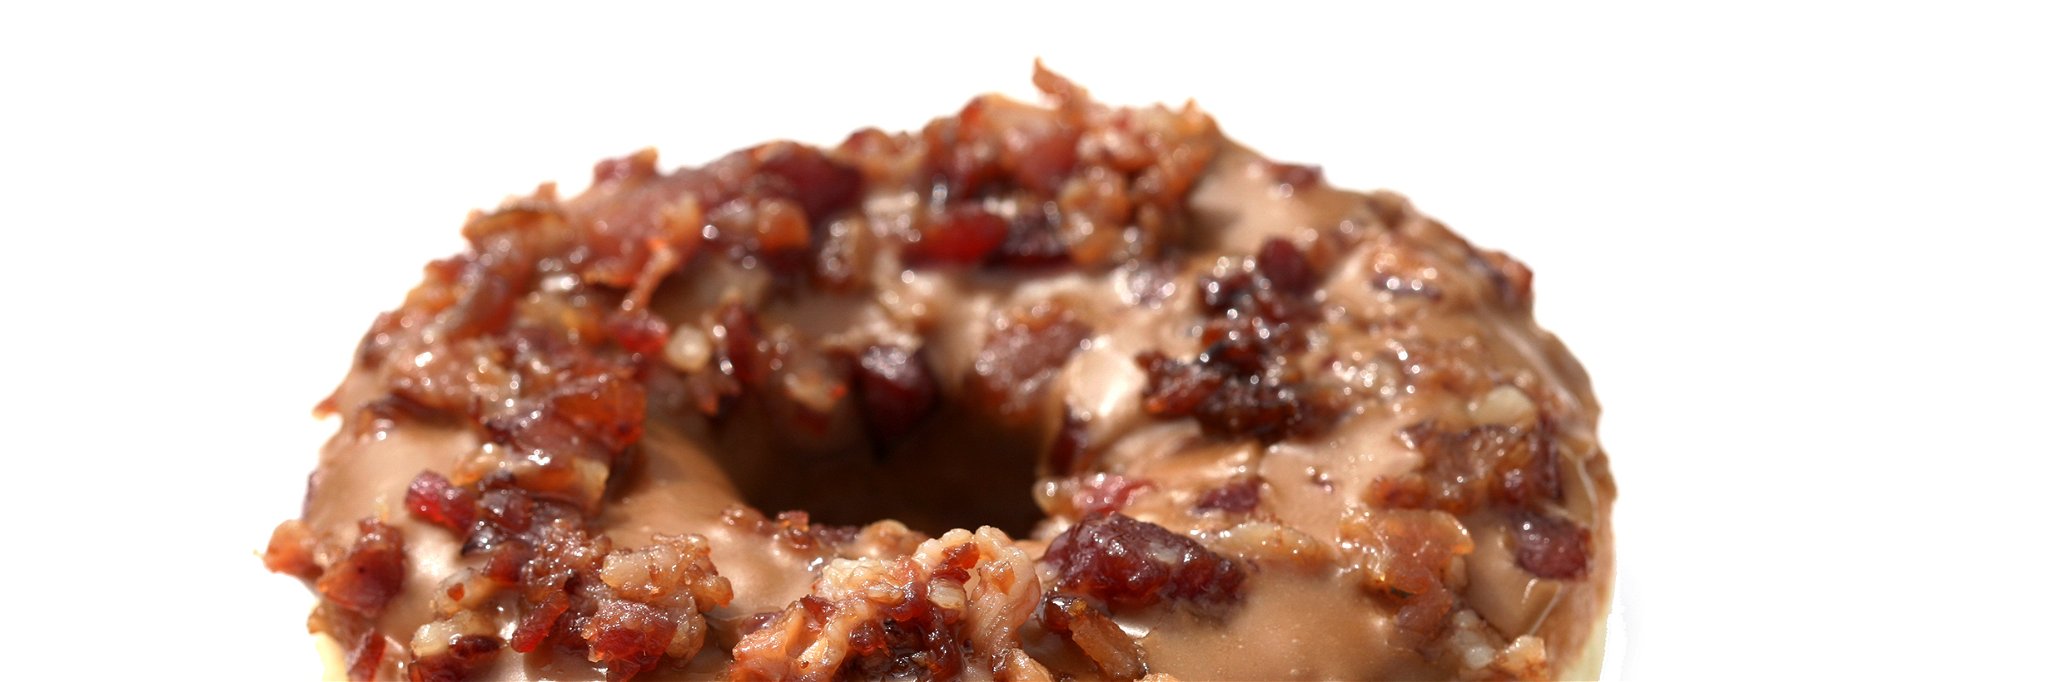 Maple bacon donut.